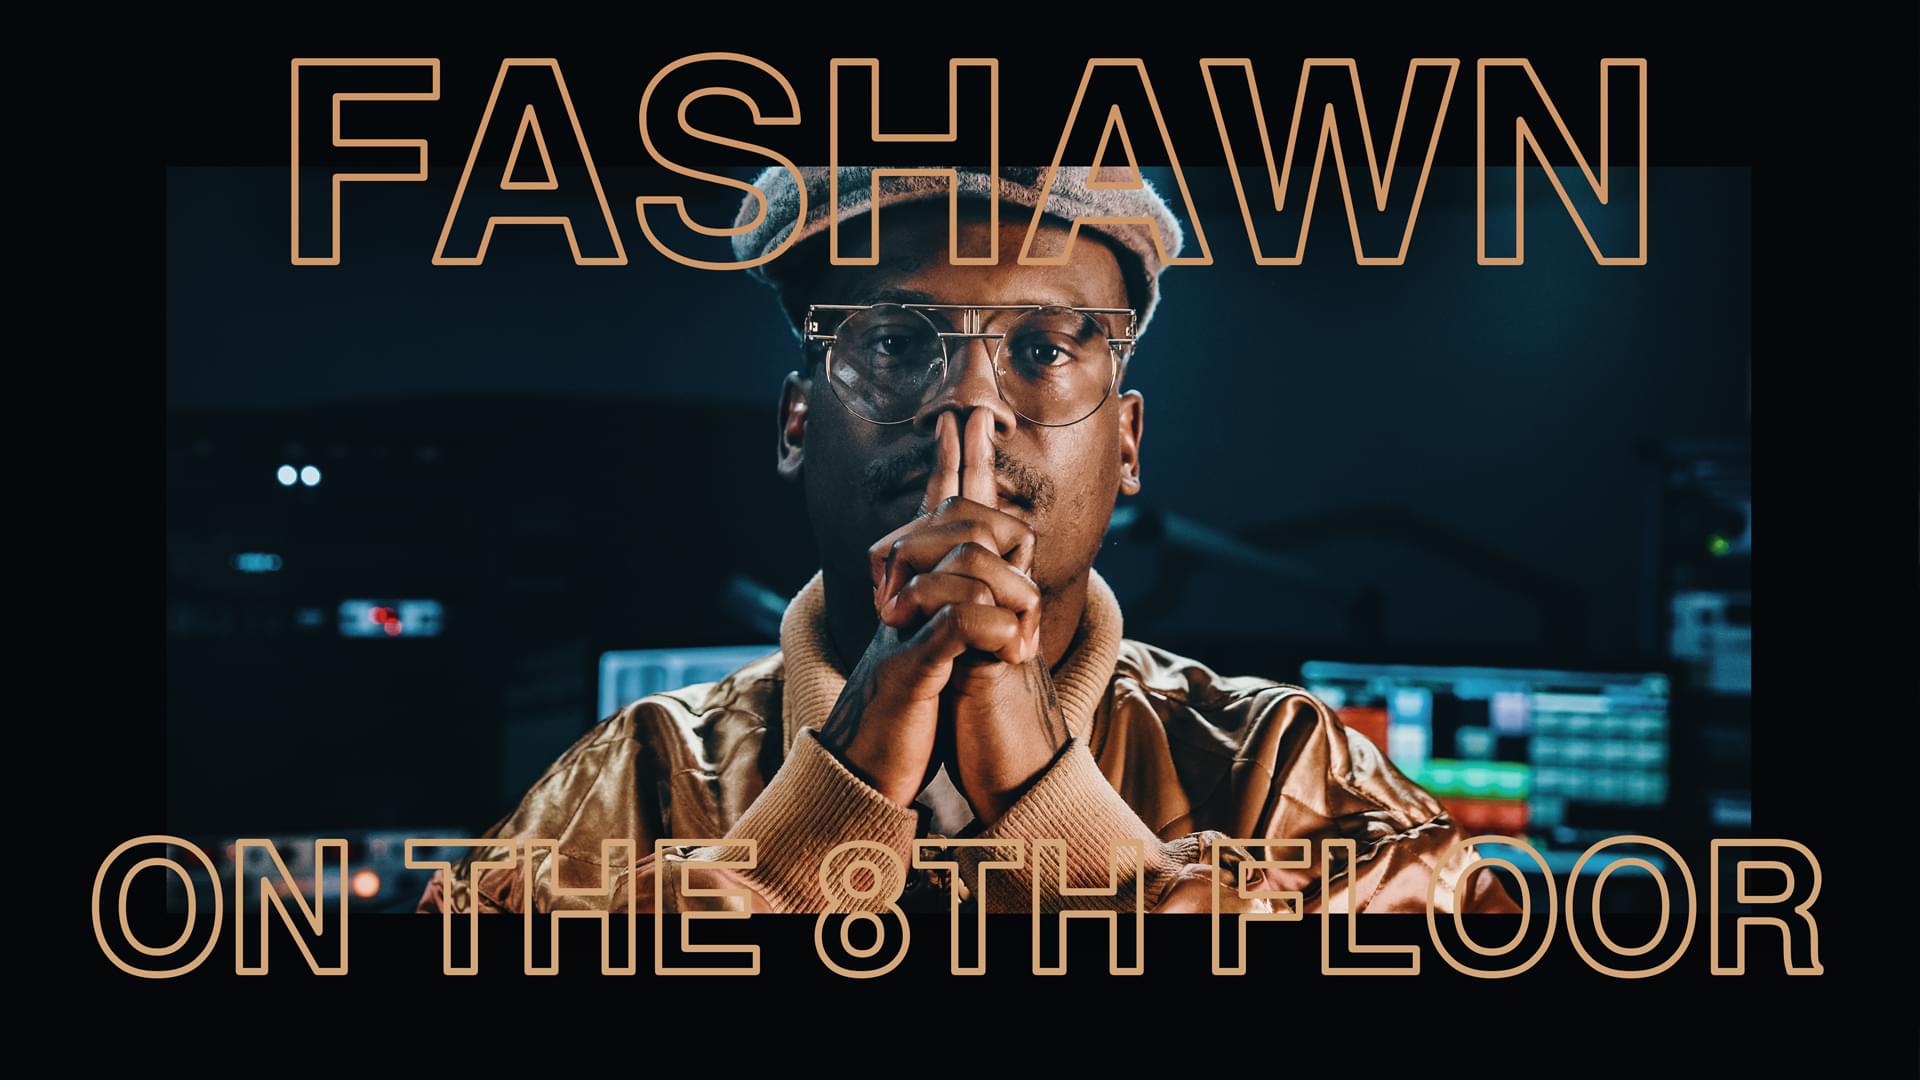 Fashawn Performs “Fashawn” LIVE #OnThe8thFloor [WATCH]